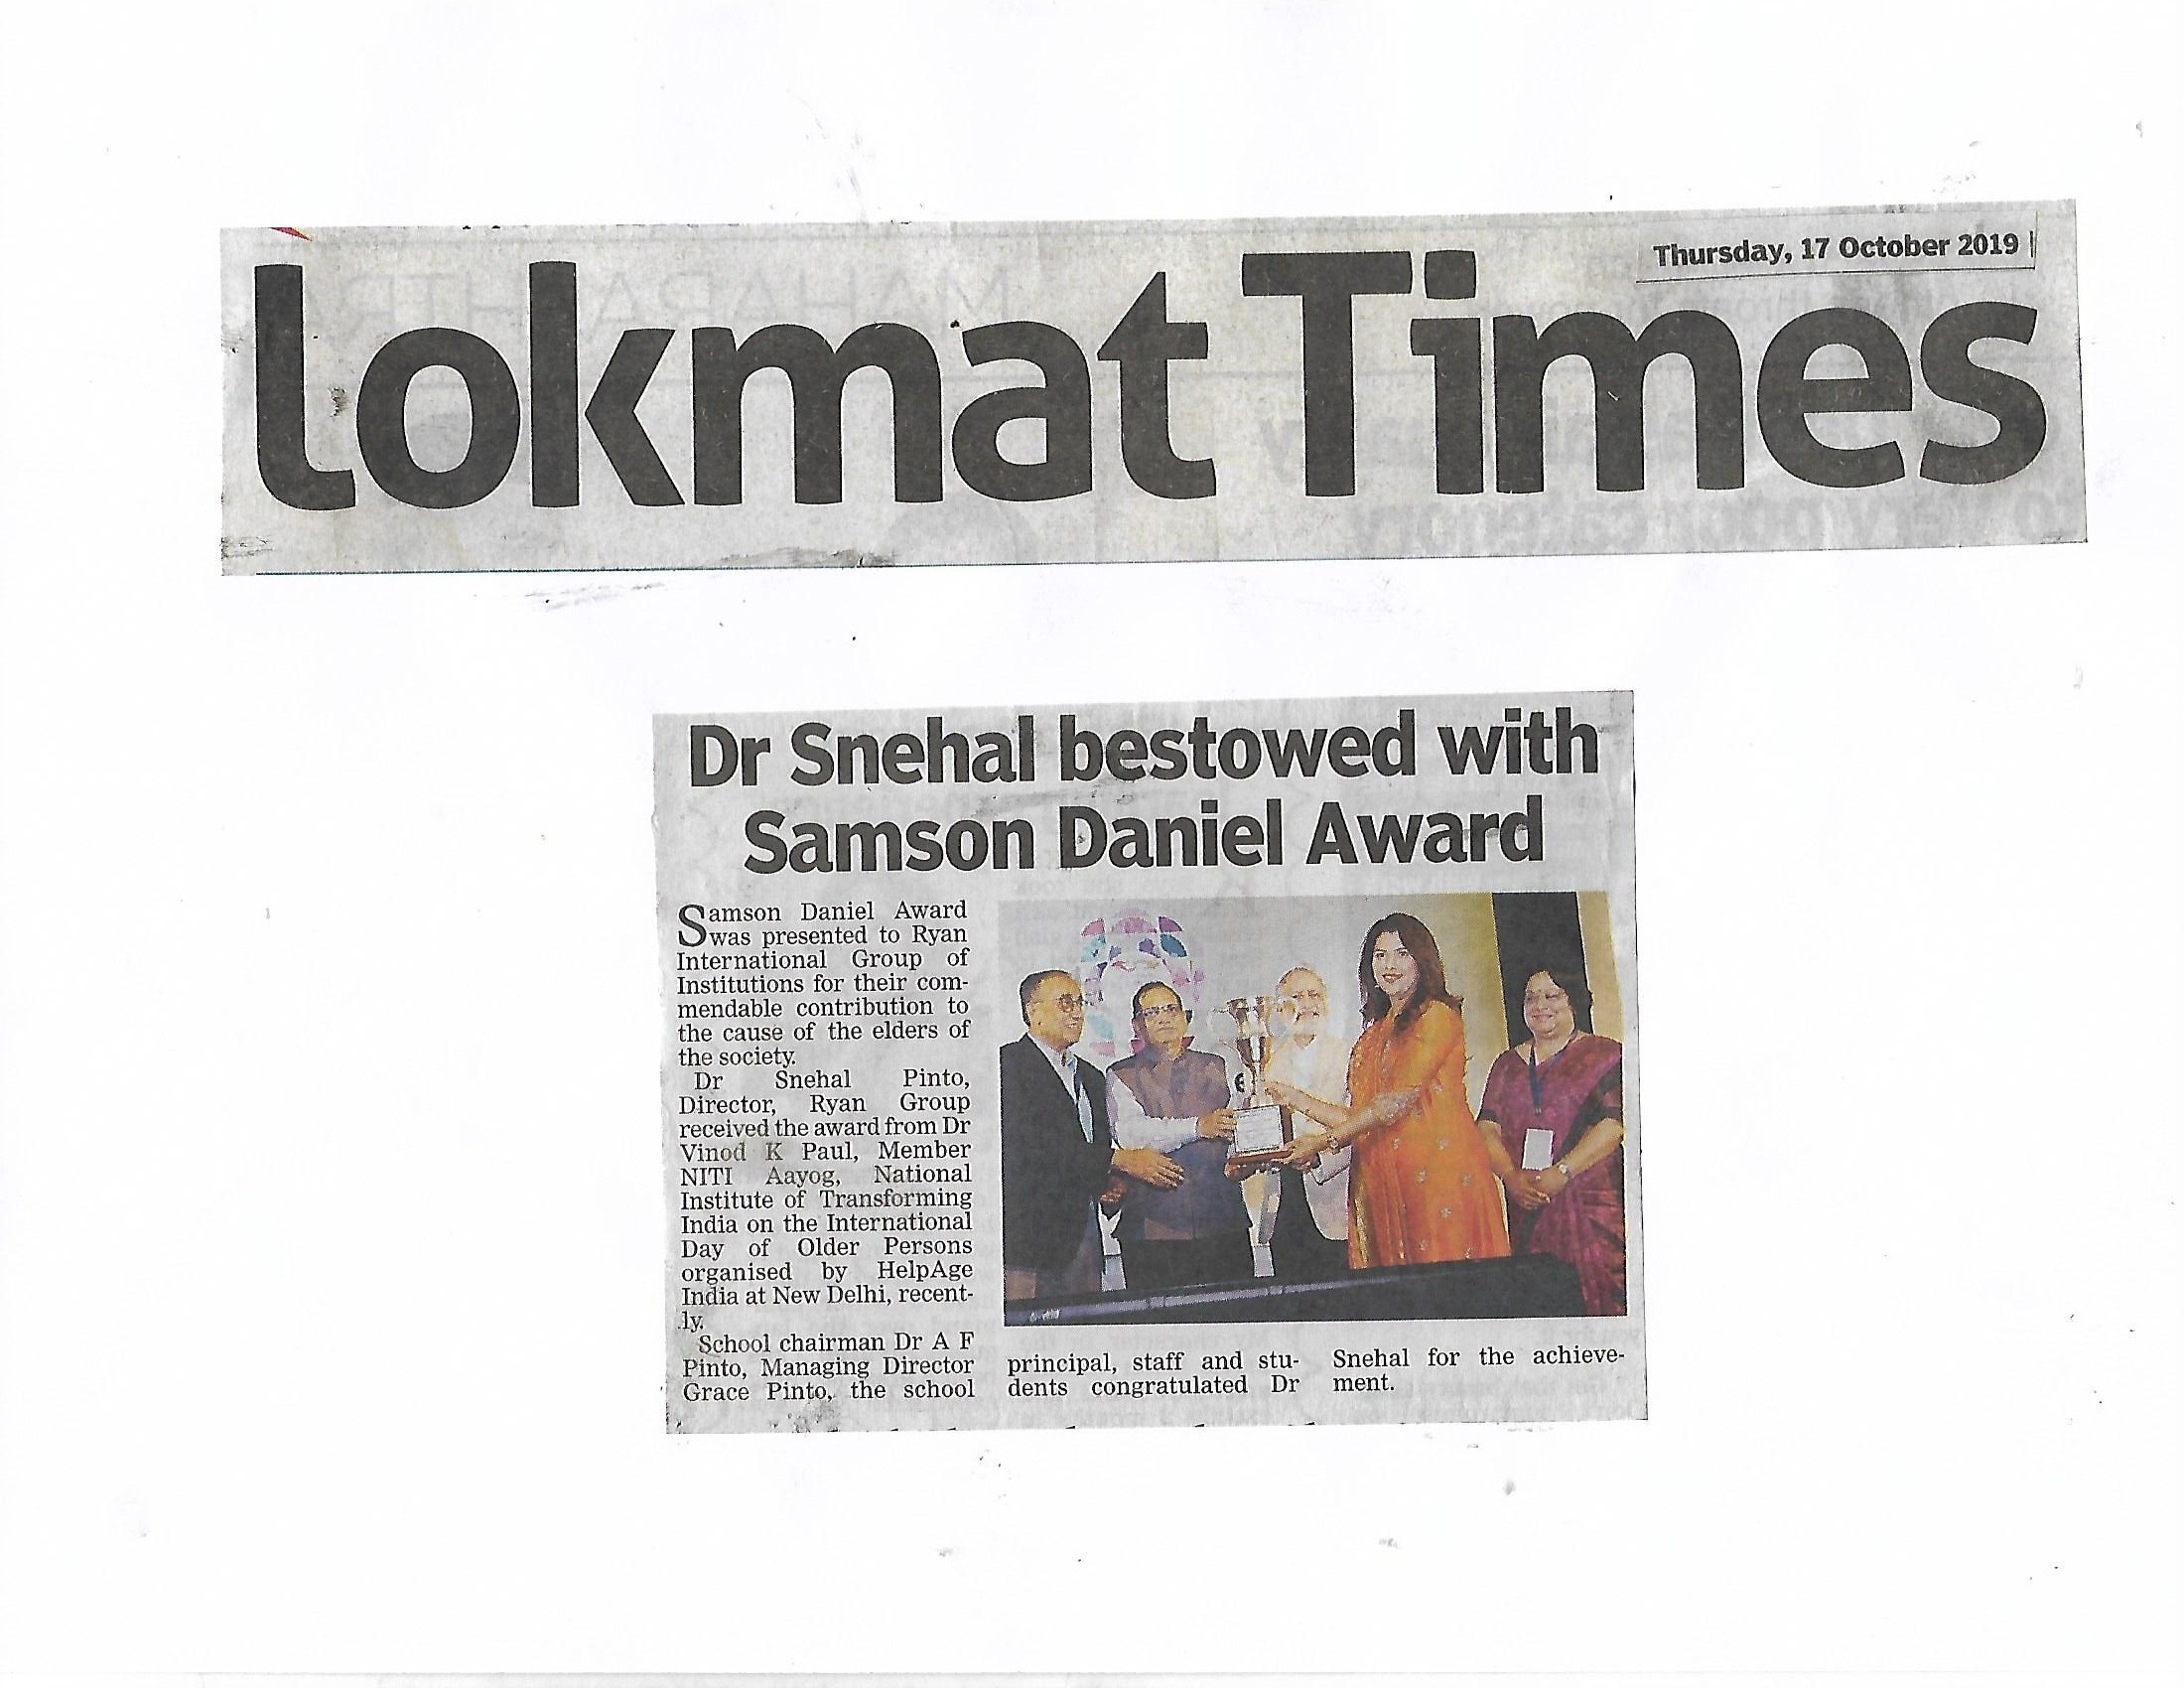 Samson Daniel Award' - Ryan International School, Aurangabad